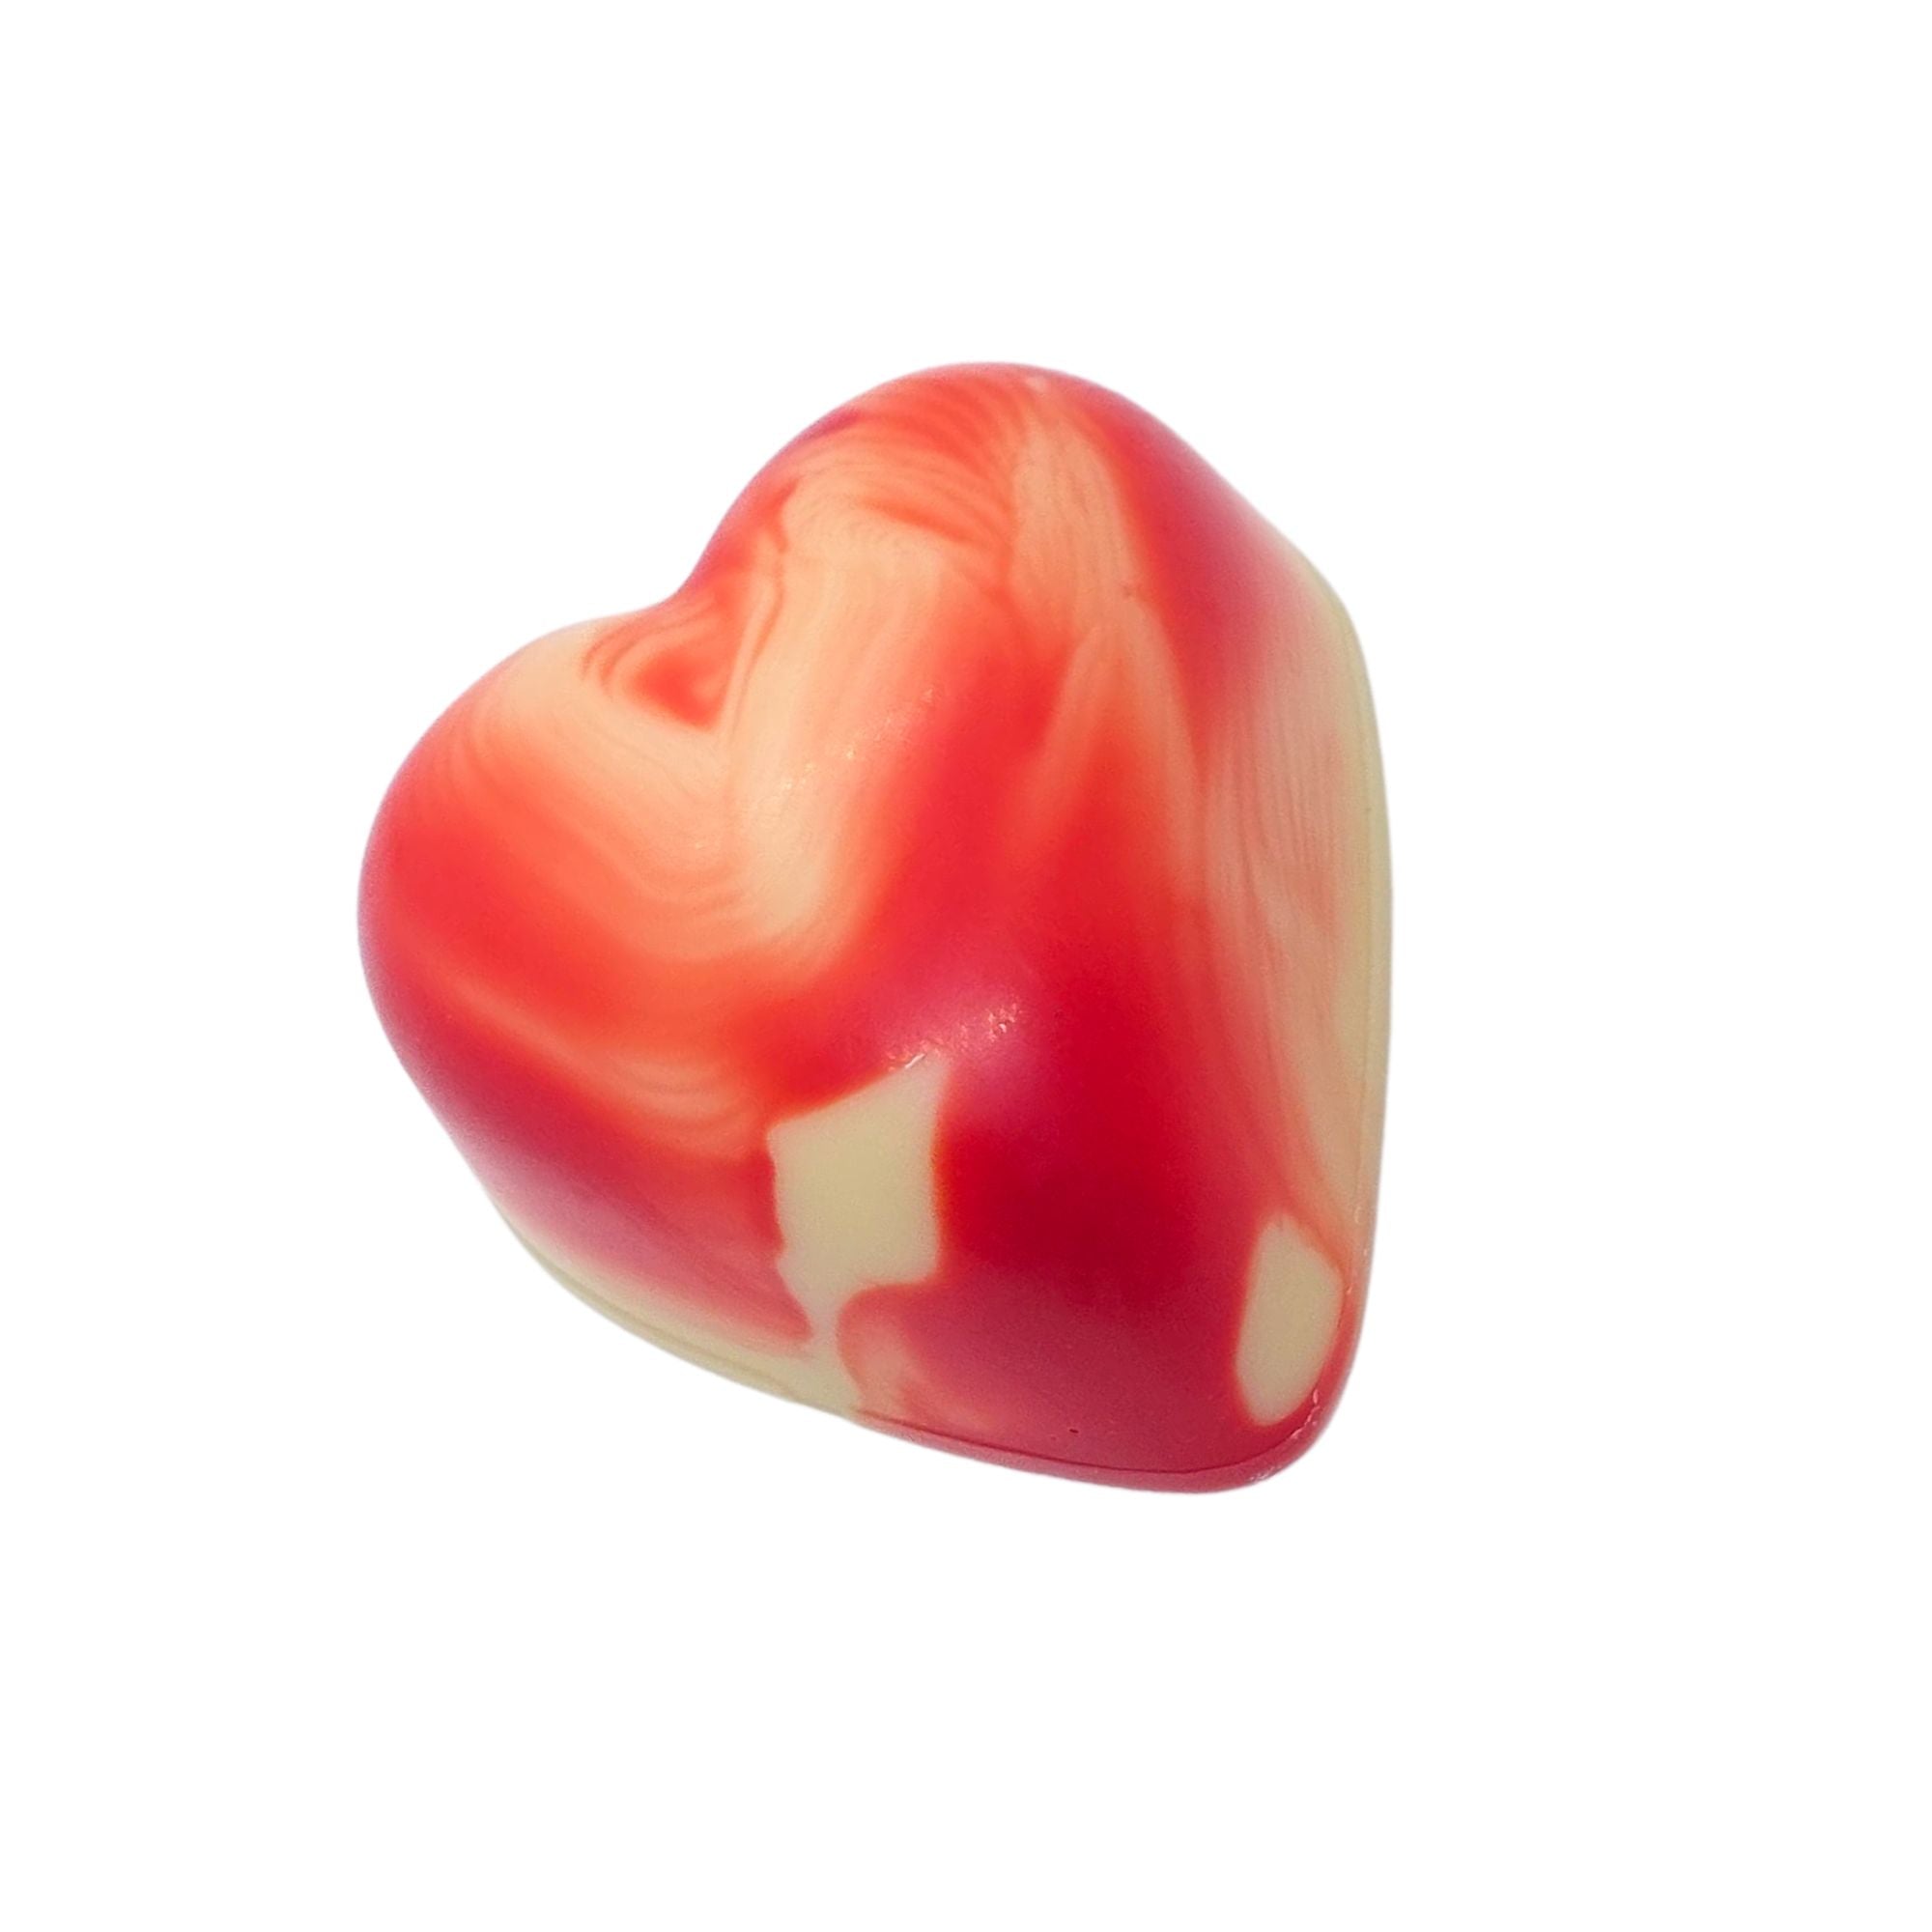 Red Heart - Strawberry Cream